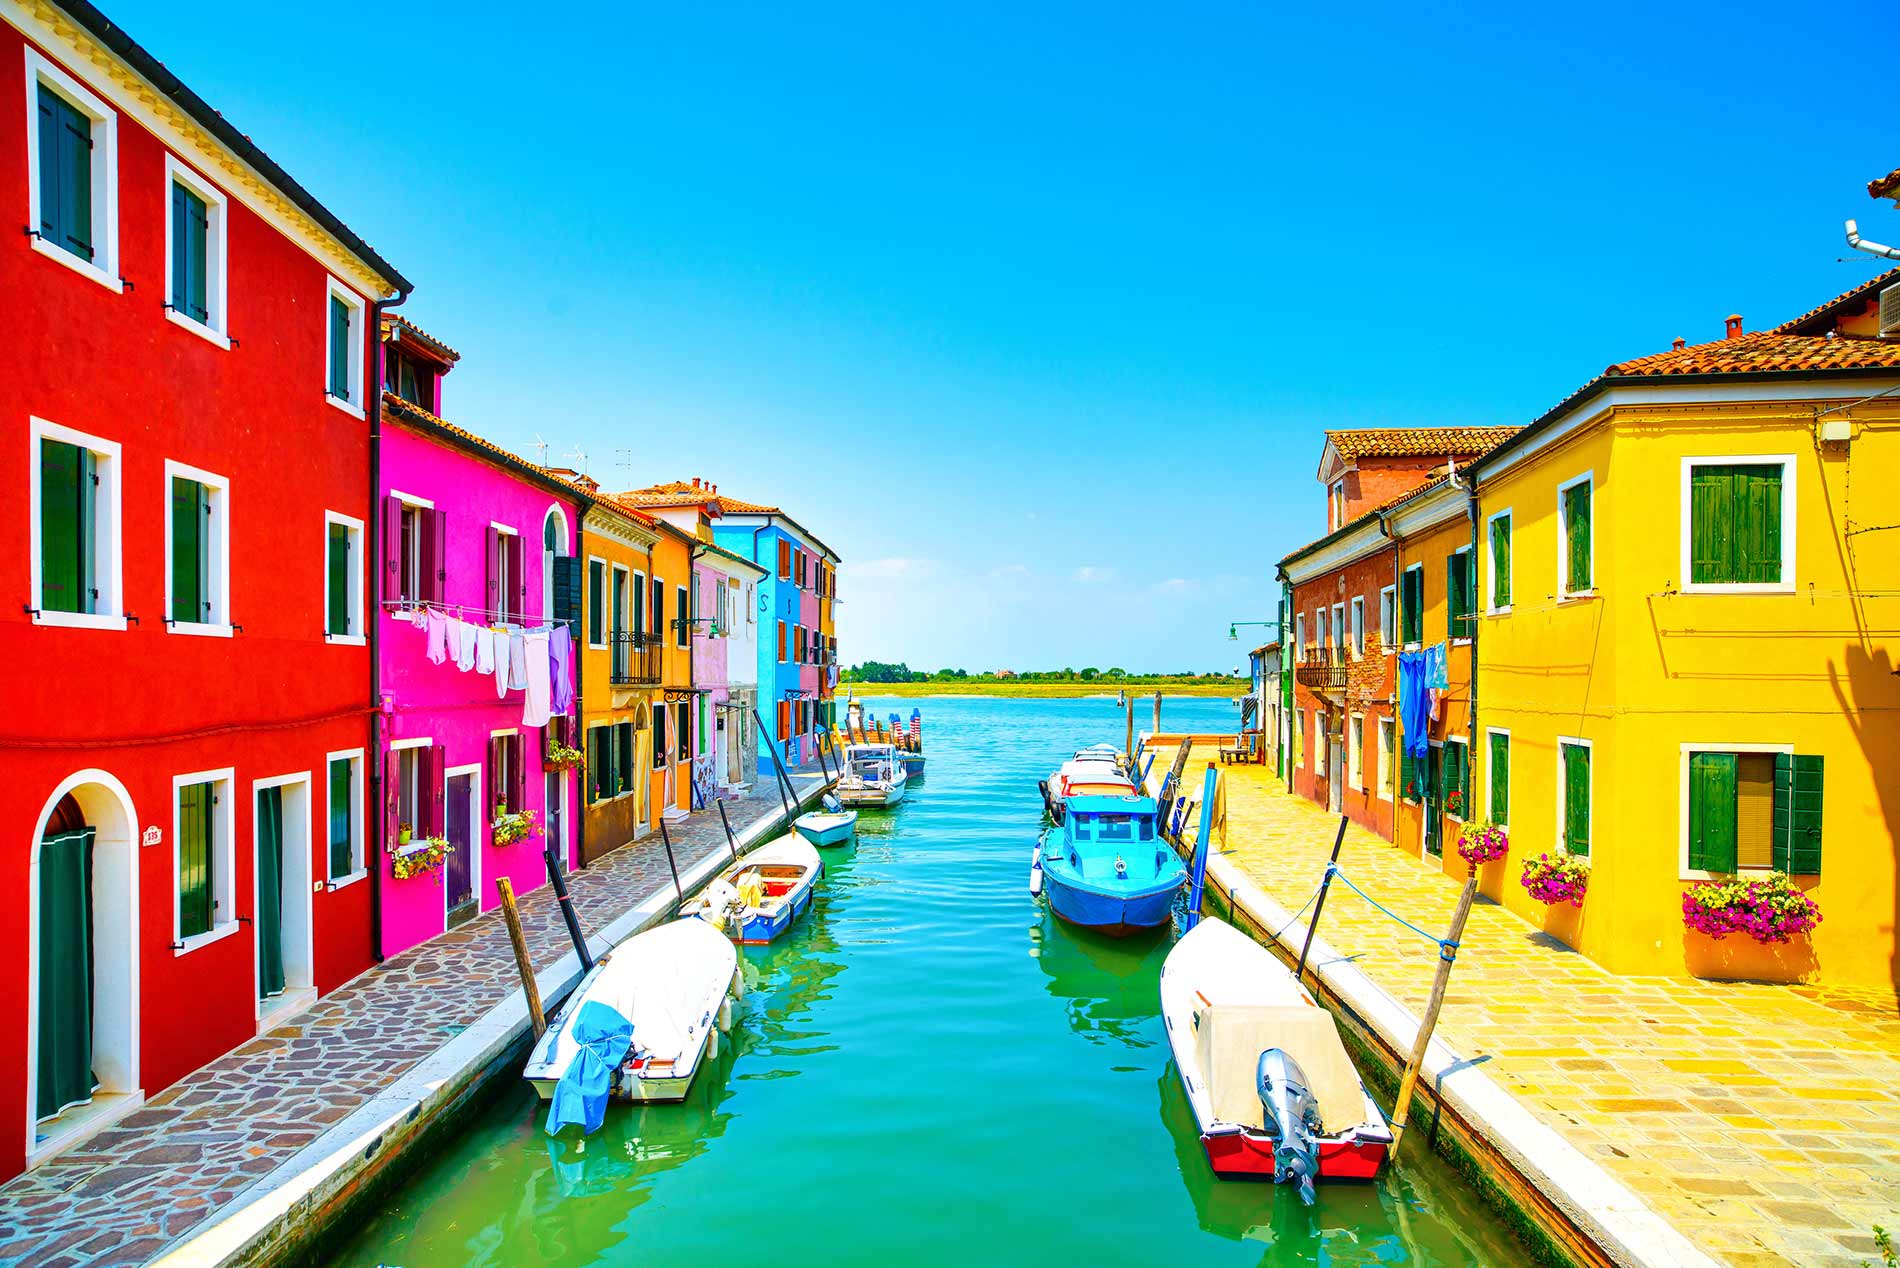 Absolute Italy – Customizing Italian Travel